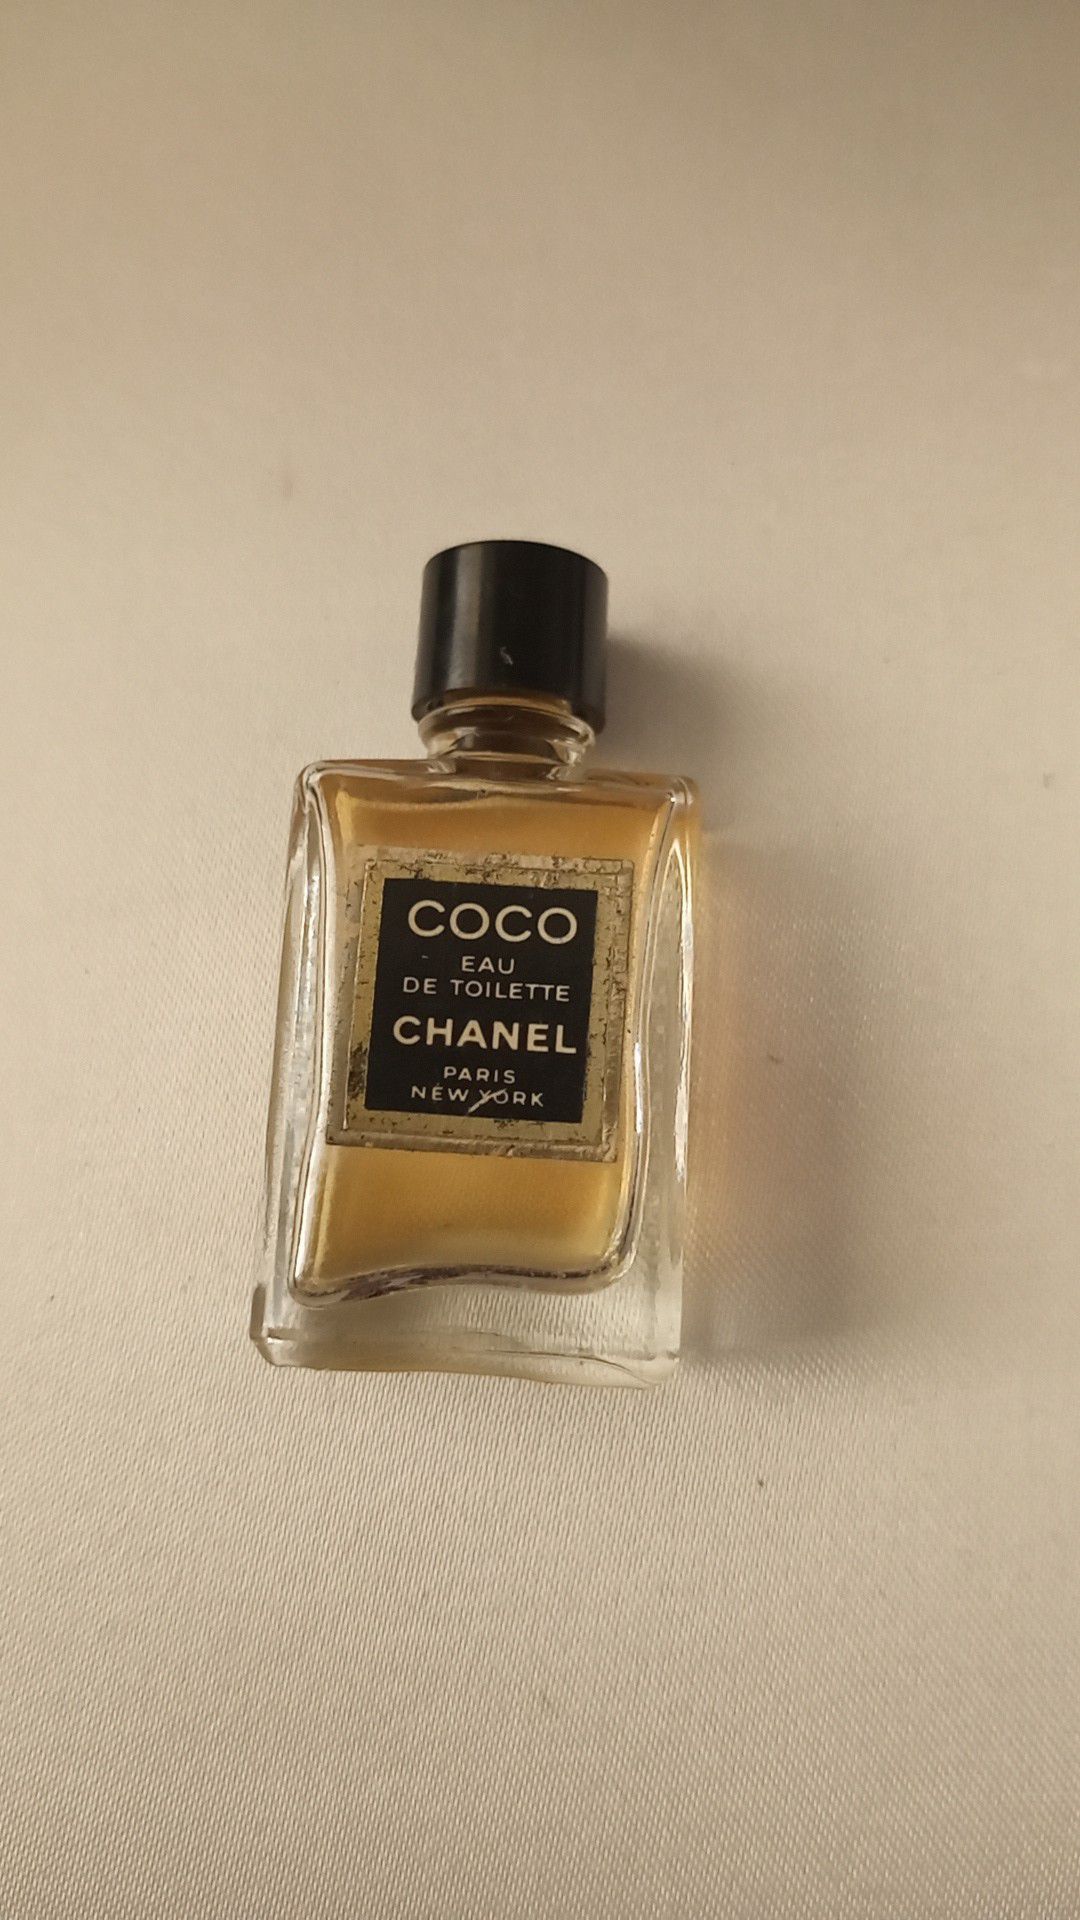 Mini coco Chanel perfume and clinic perfume